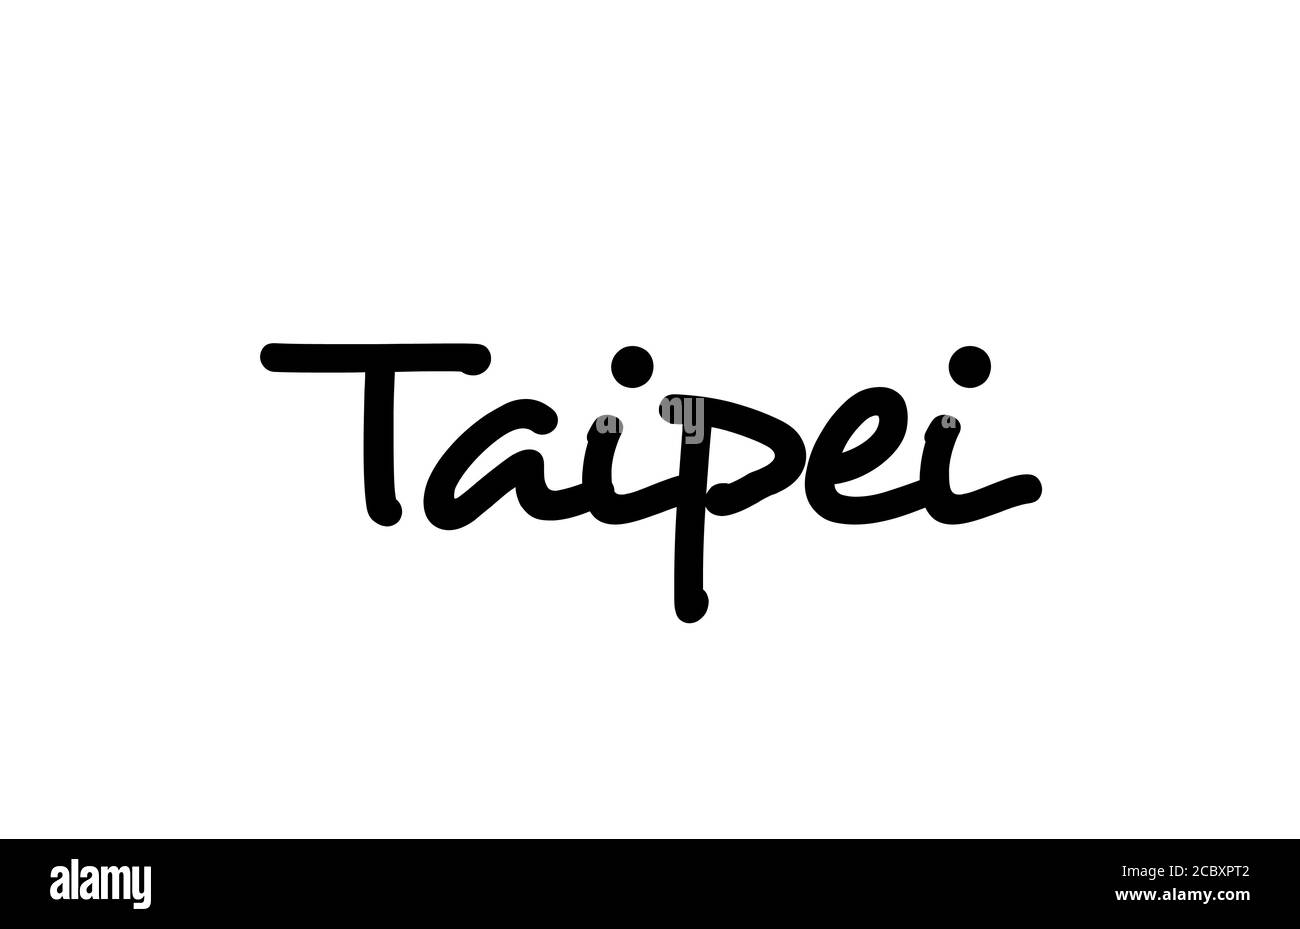 Taipei Stadt handgeschriebener Text Wort Hand Lettering. Kalligrafietext. Typografie in schwarzer Farbe Stock Vektor